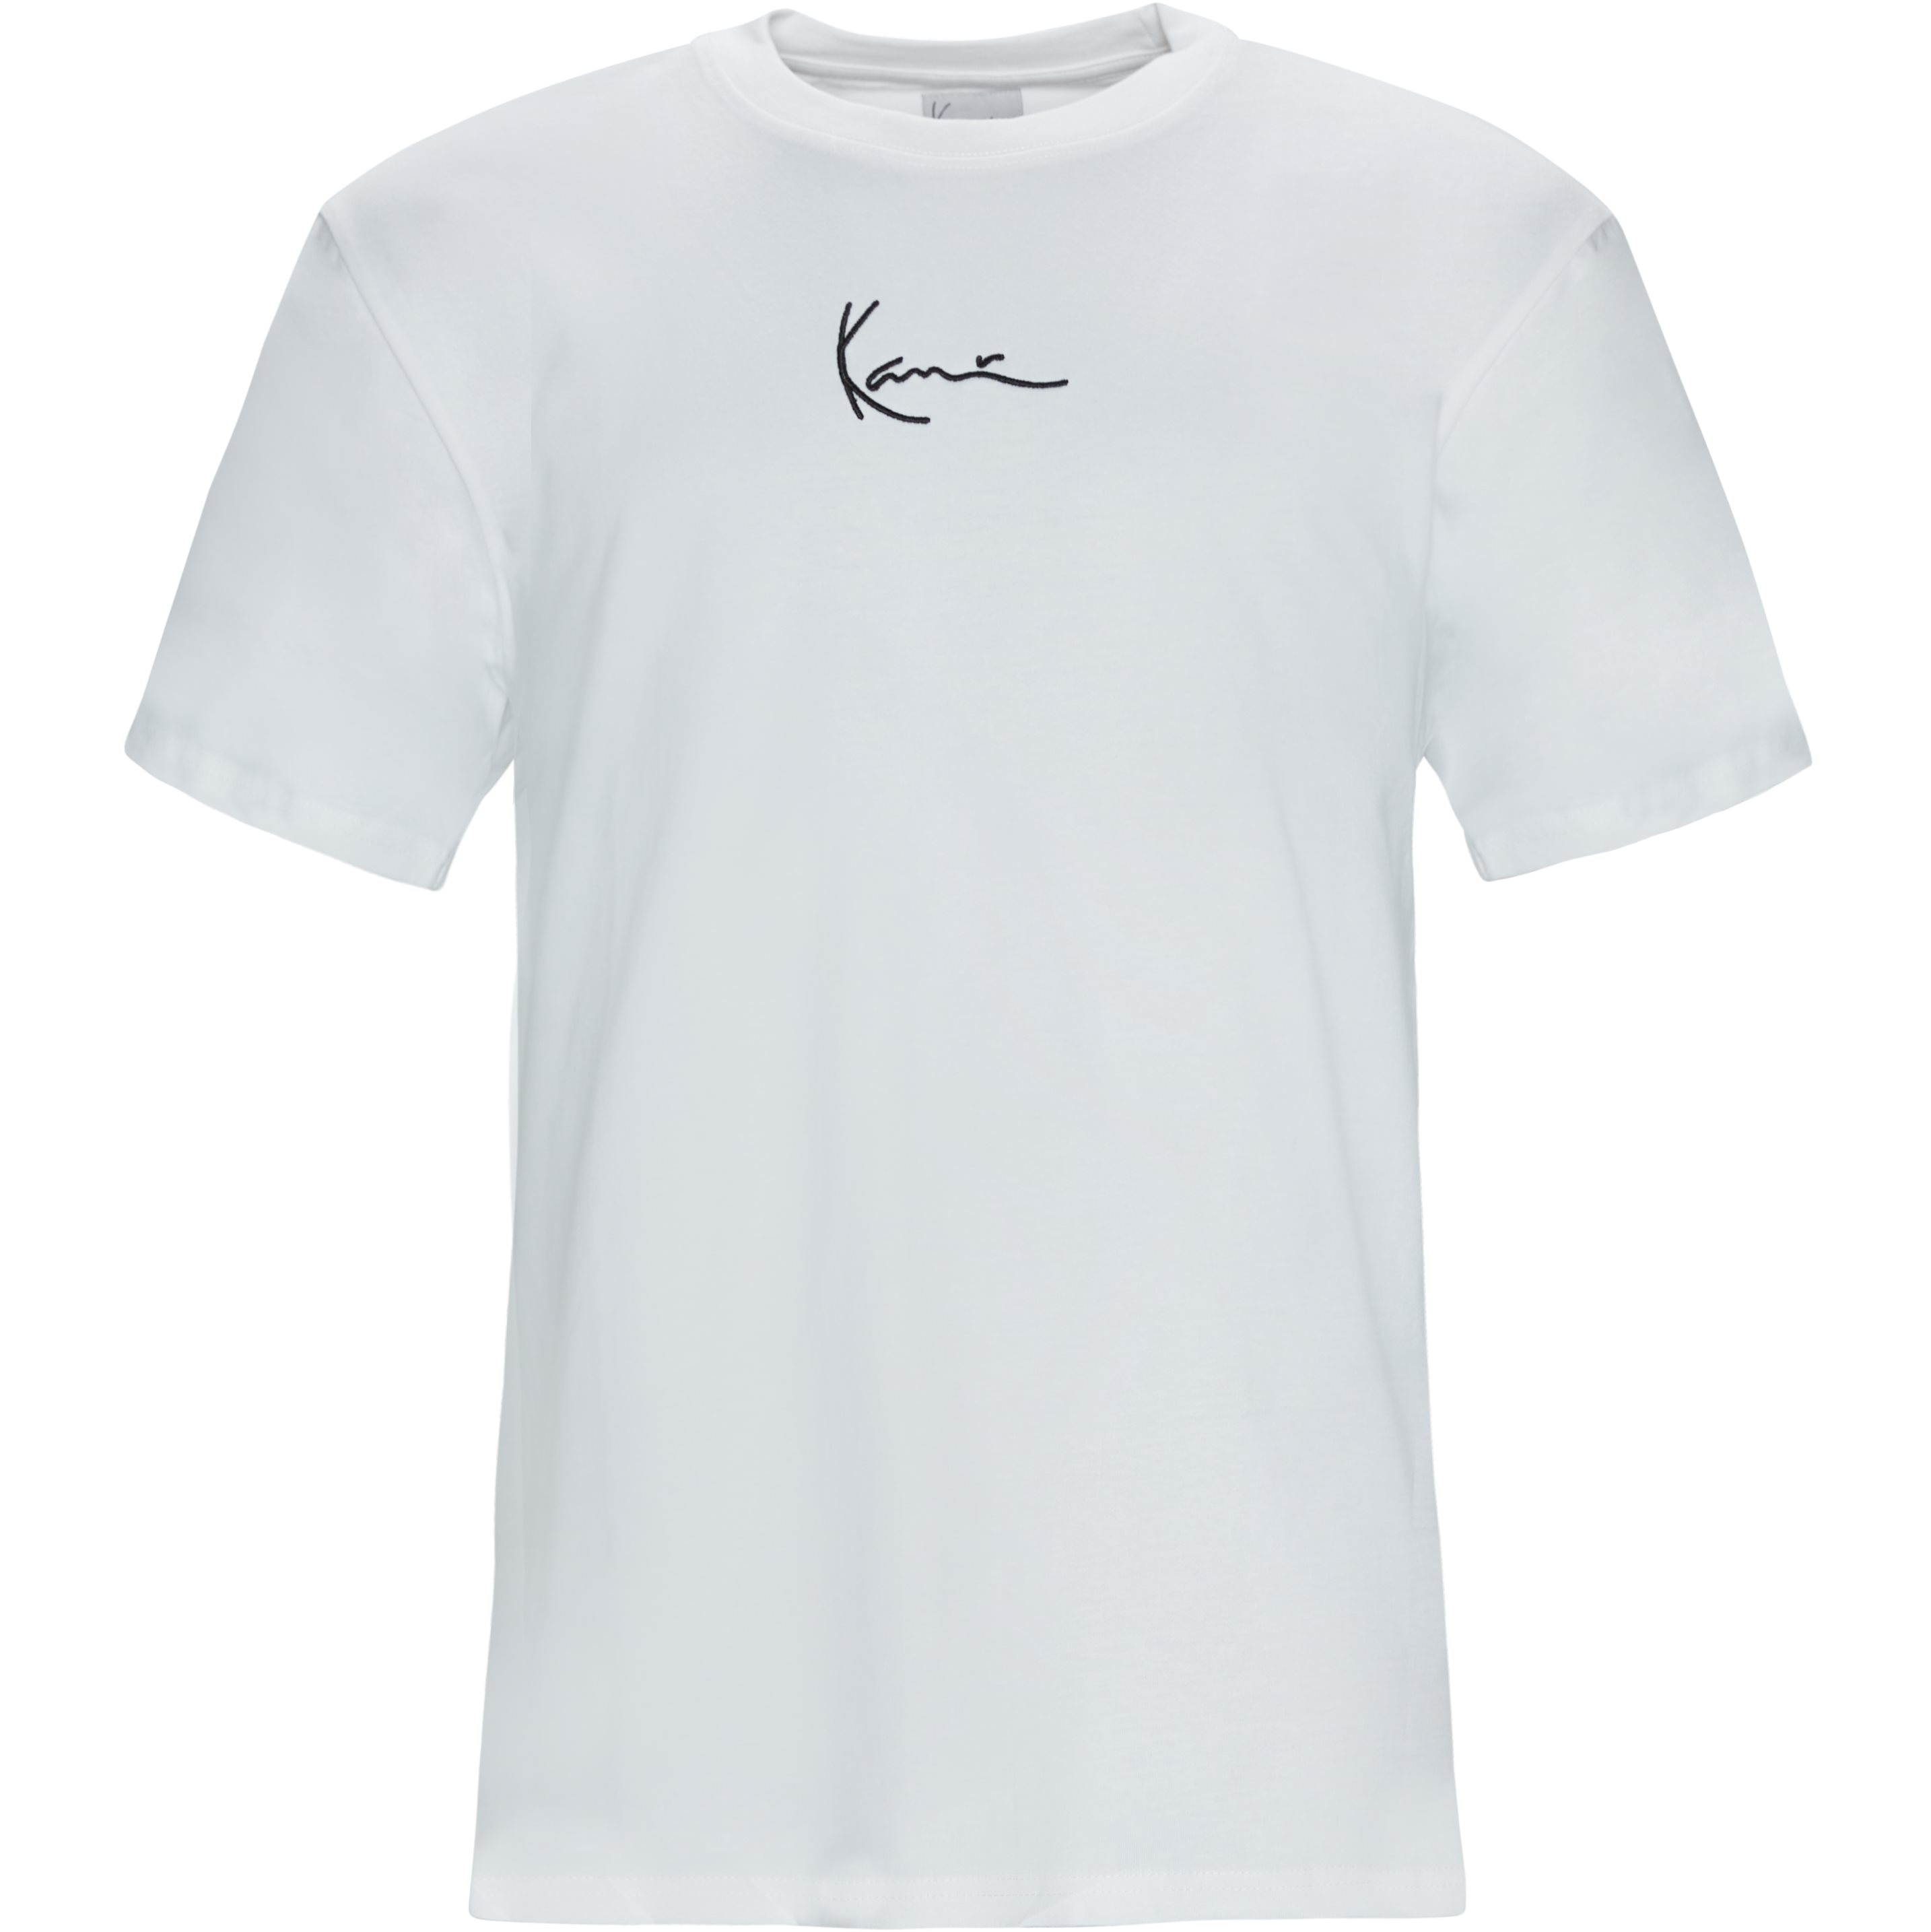 Small Signature Tee - T-shirts - Regular fit - Vit